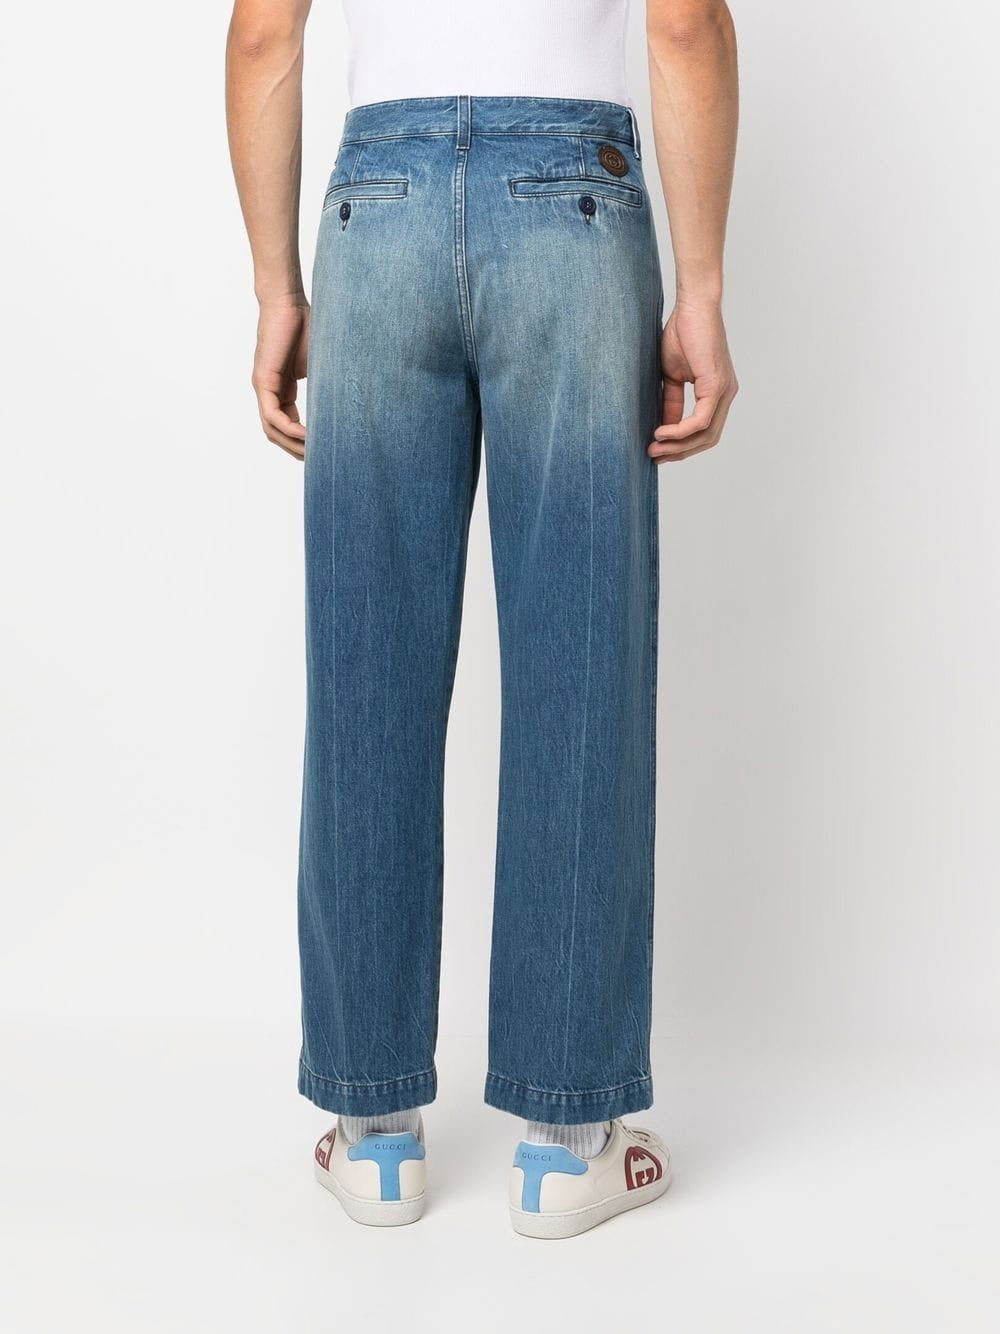 Straight-leg cut jeans